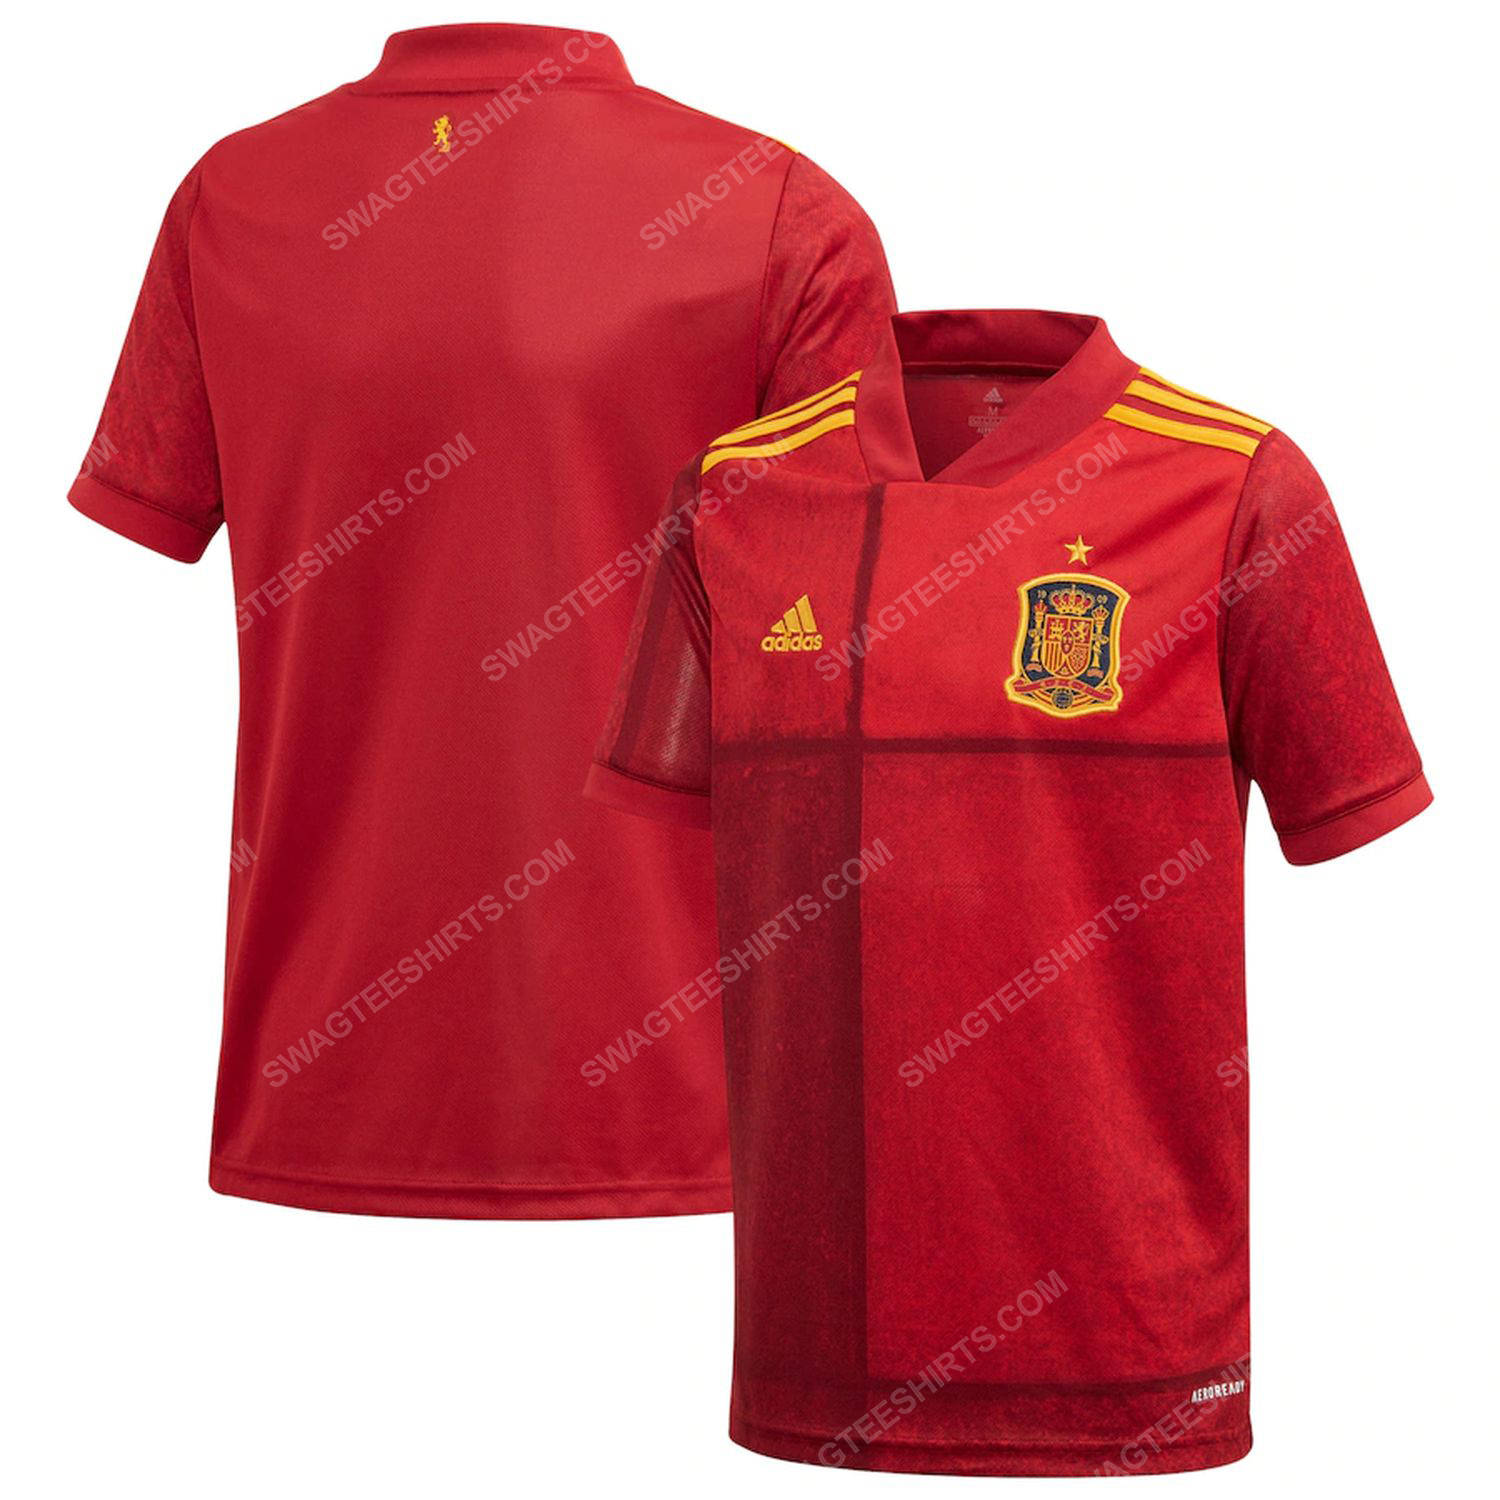 Spain national football team all over print football jersey 2 - Copy